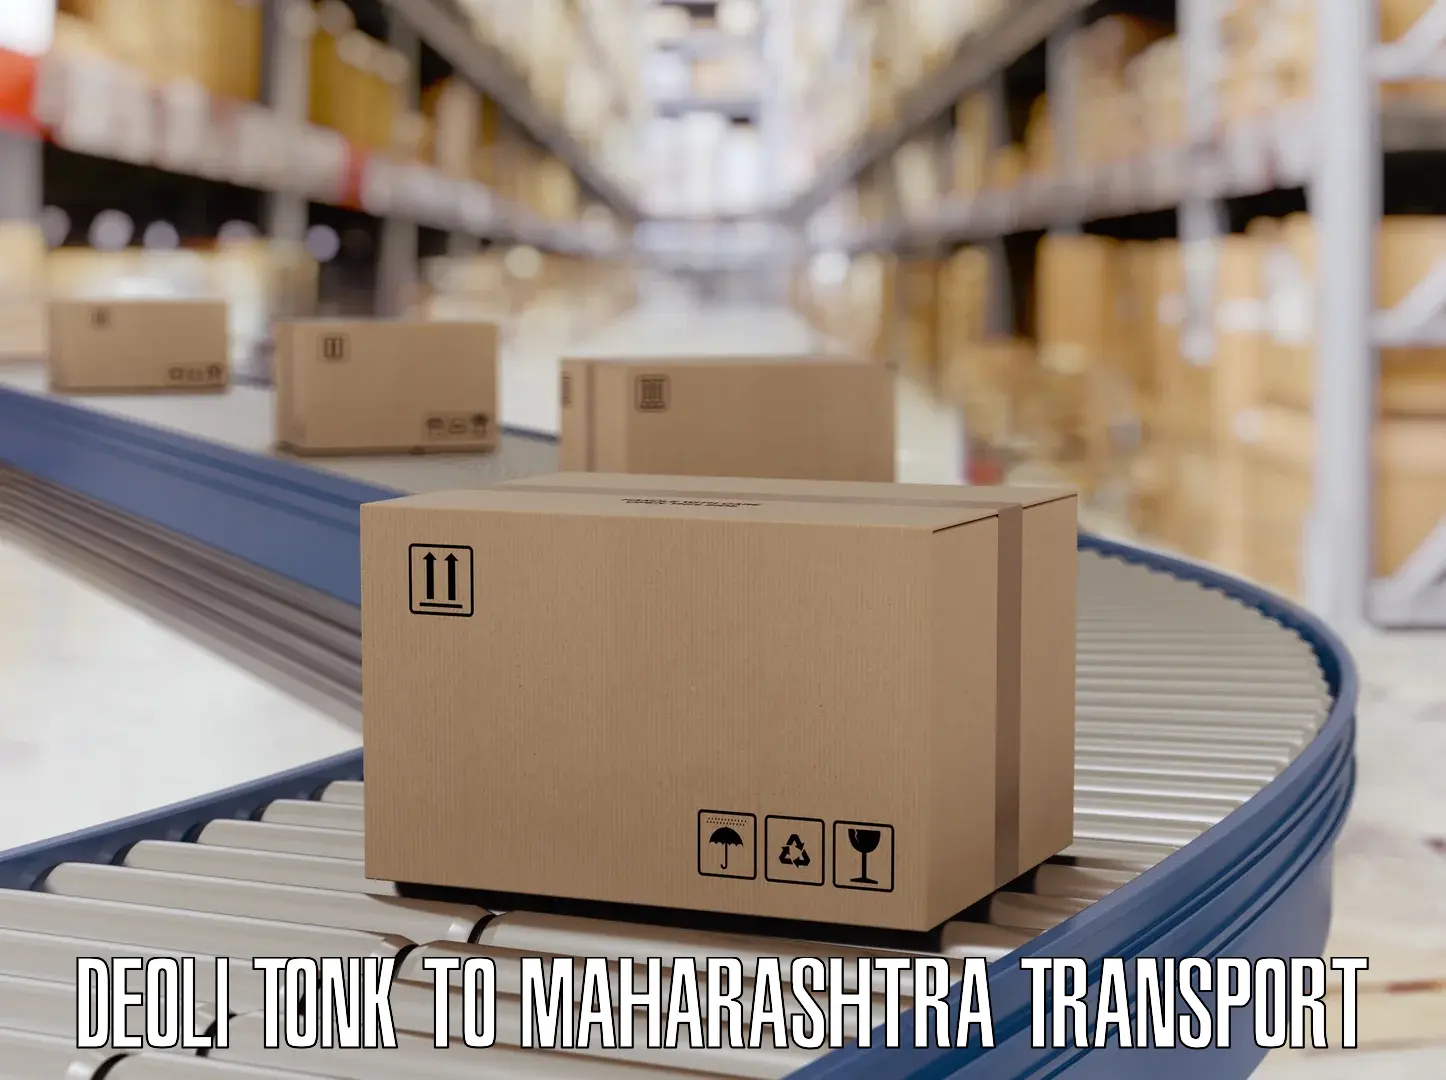 Truck transport companies in India Deoli Tonk to Ichalkaranji